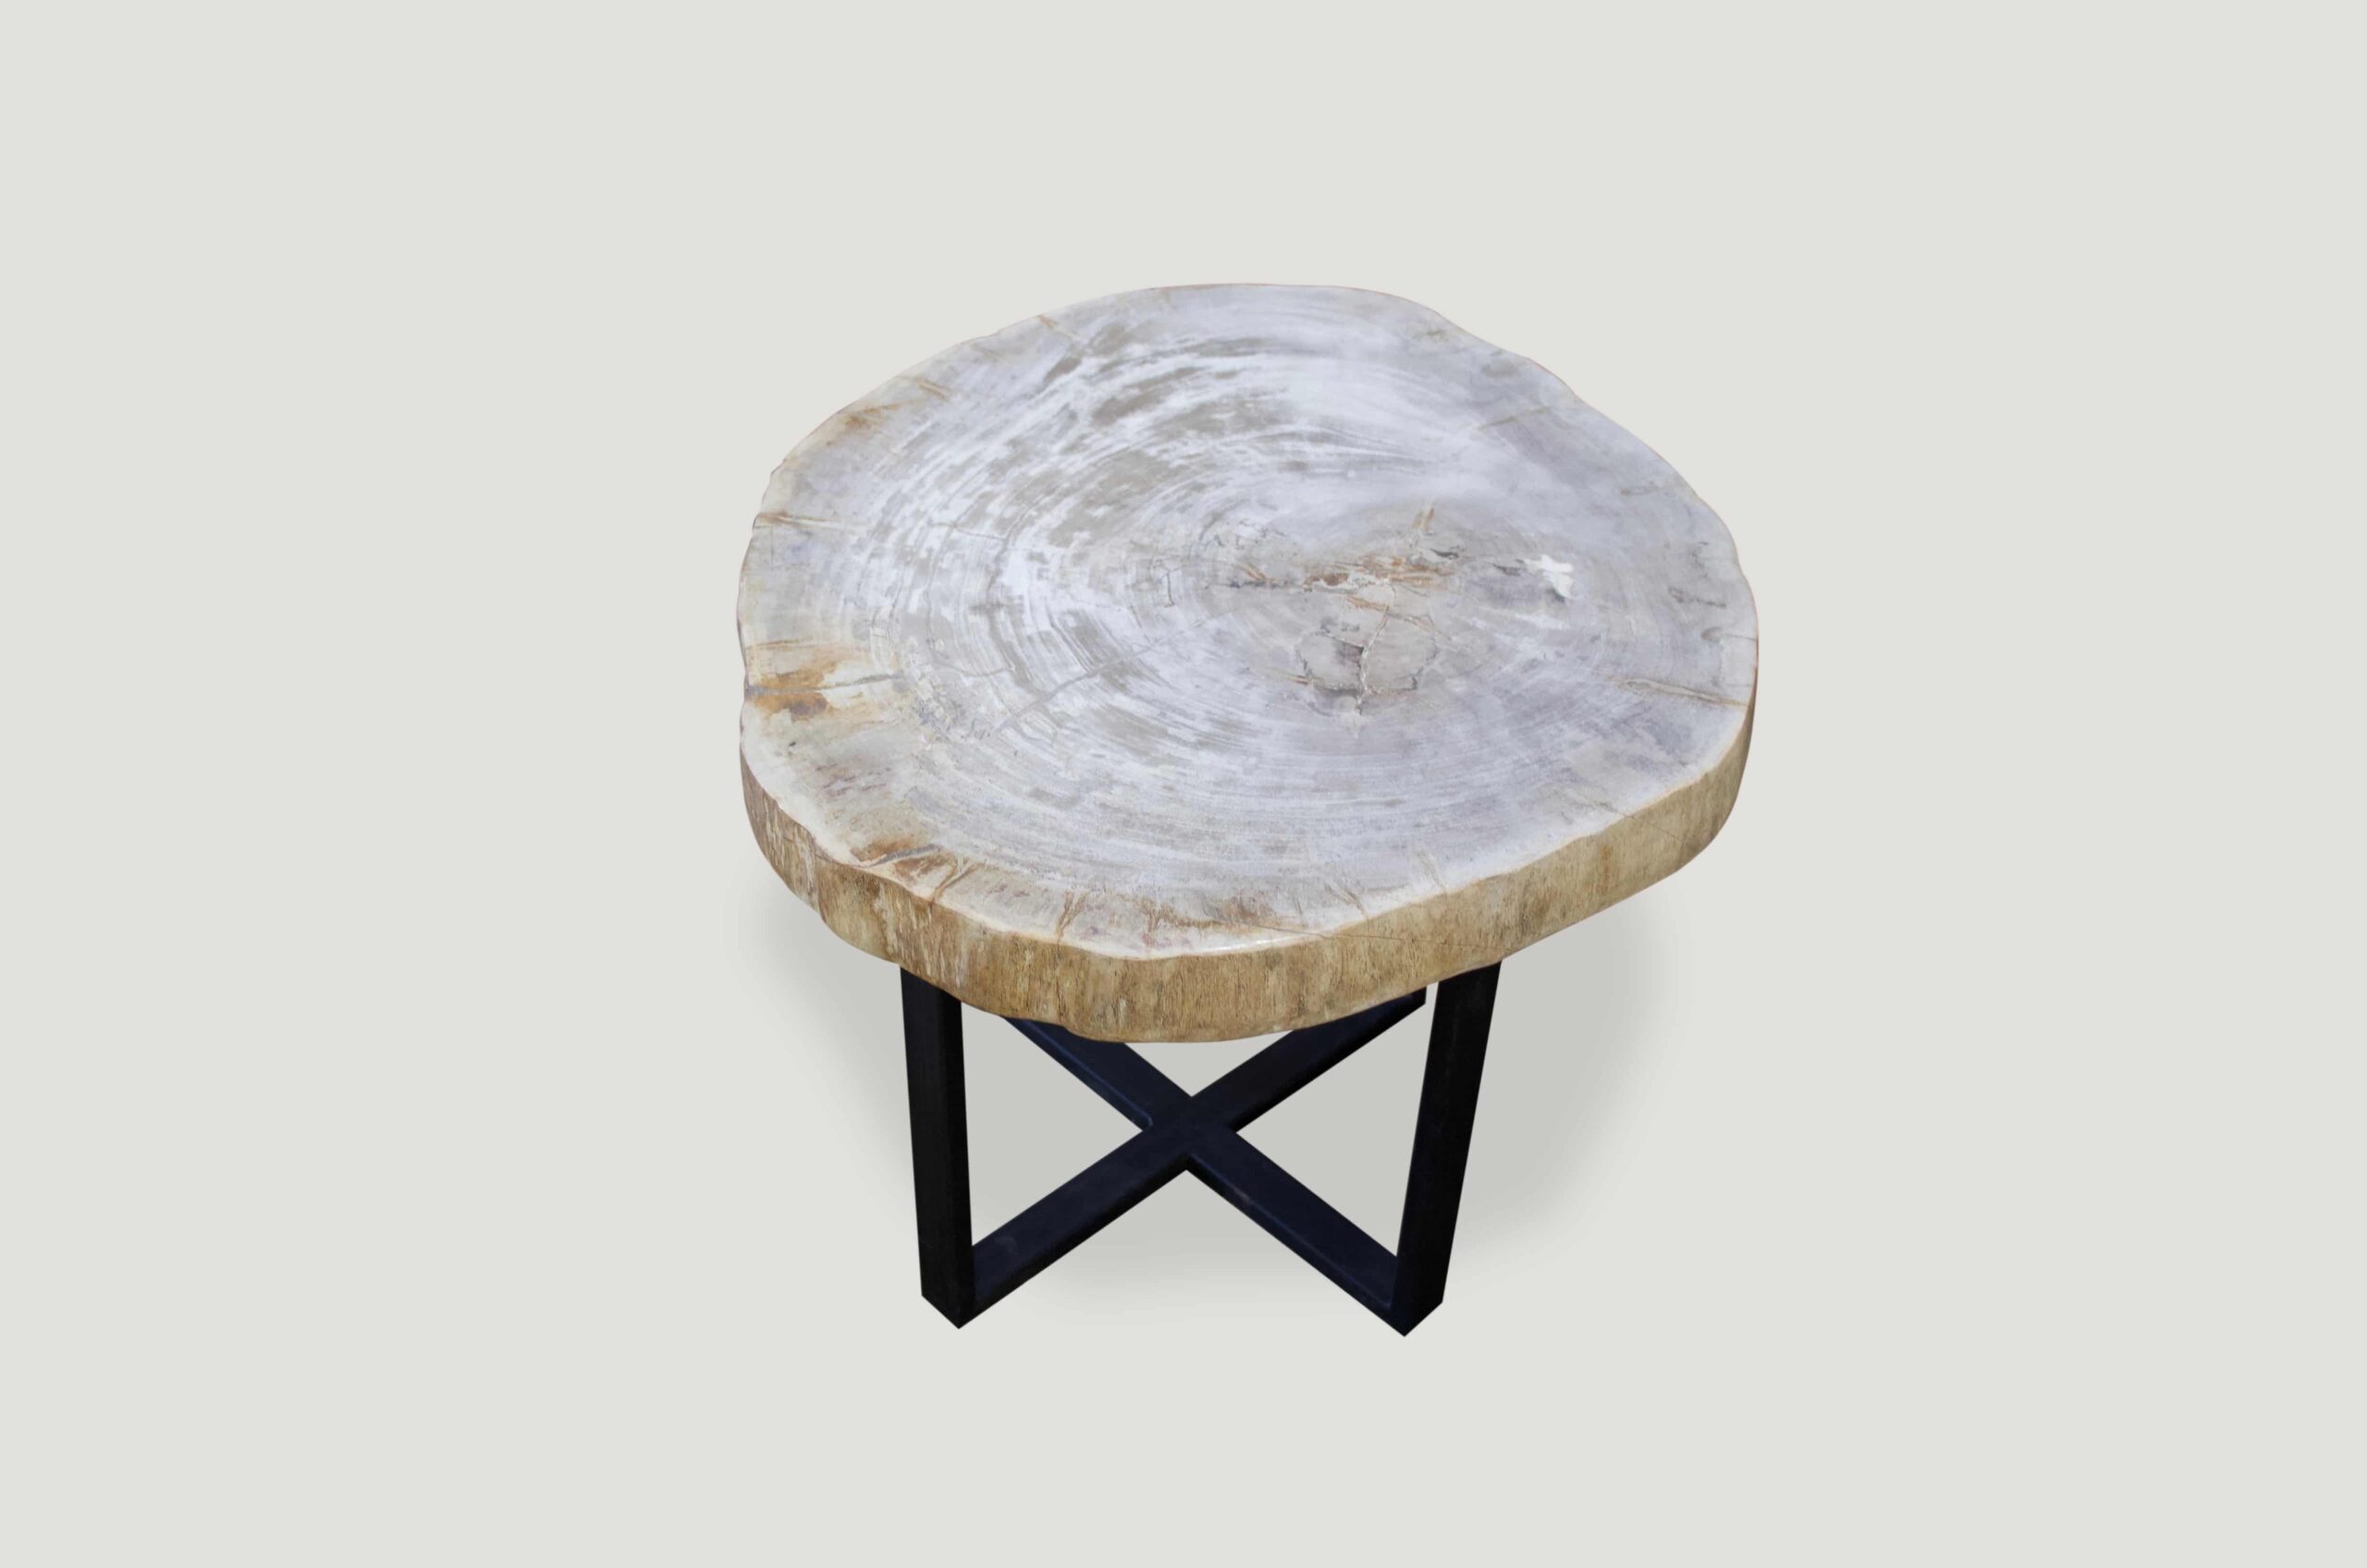 High quality petrified wood 2″ slab top side table.